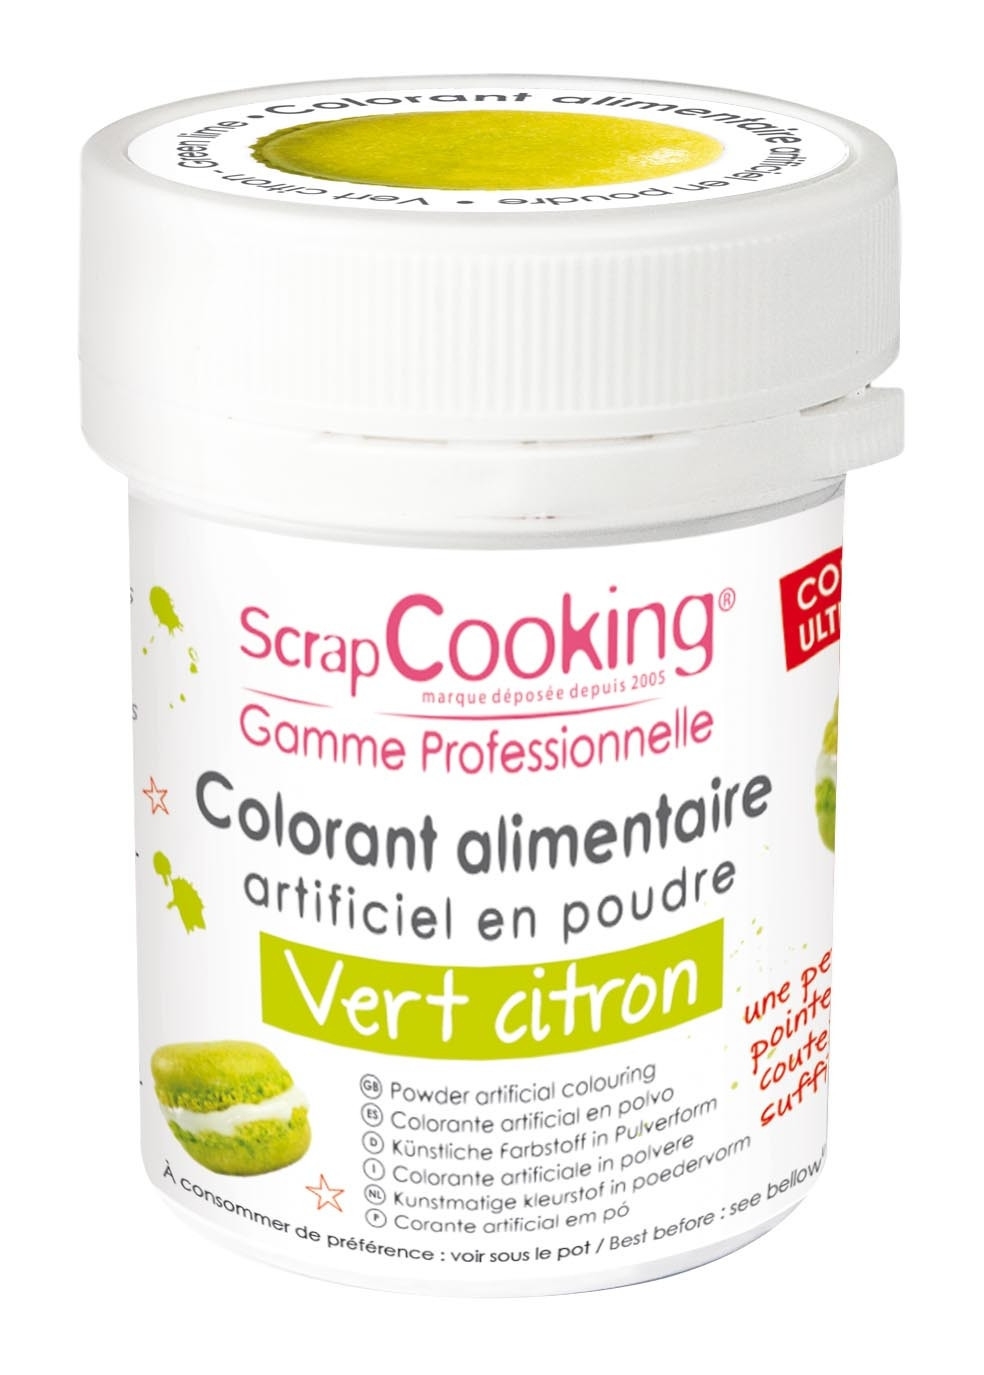 Colorant alimentaire (artificiel) Vert citron - Scrapcooking ref 4034